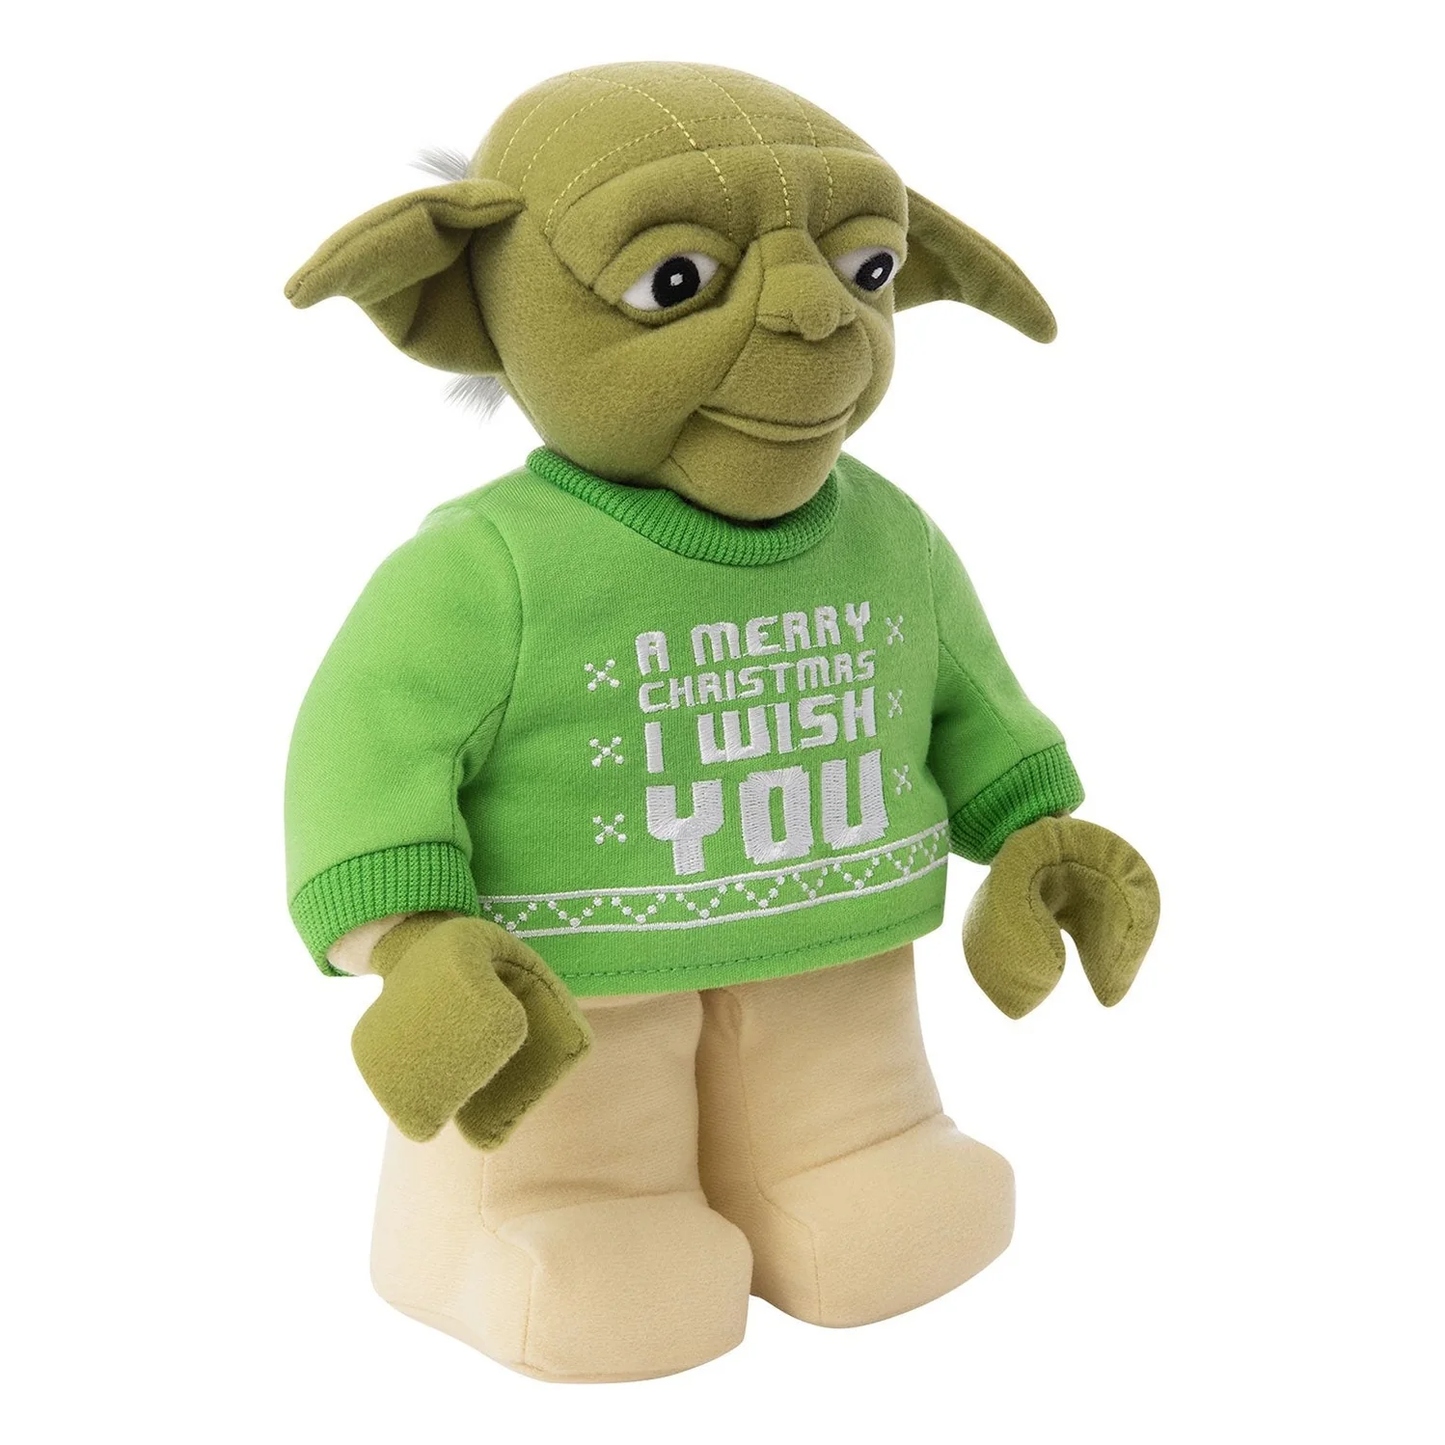 Lego Yoda Holiday Stuffed Animal